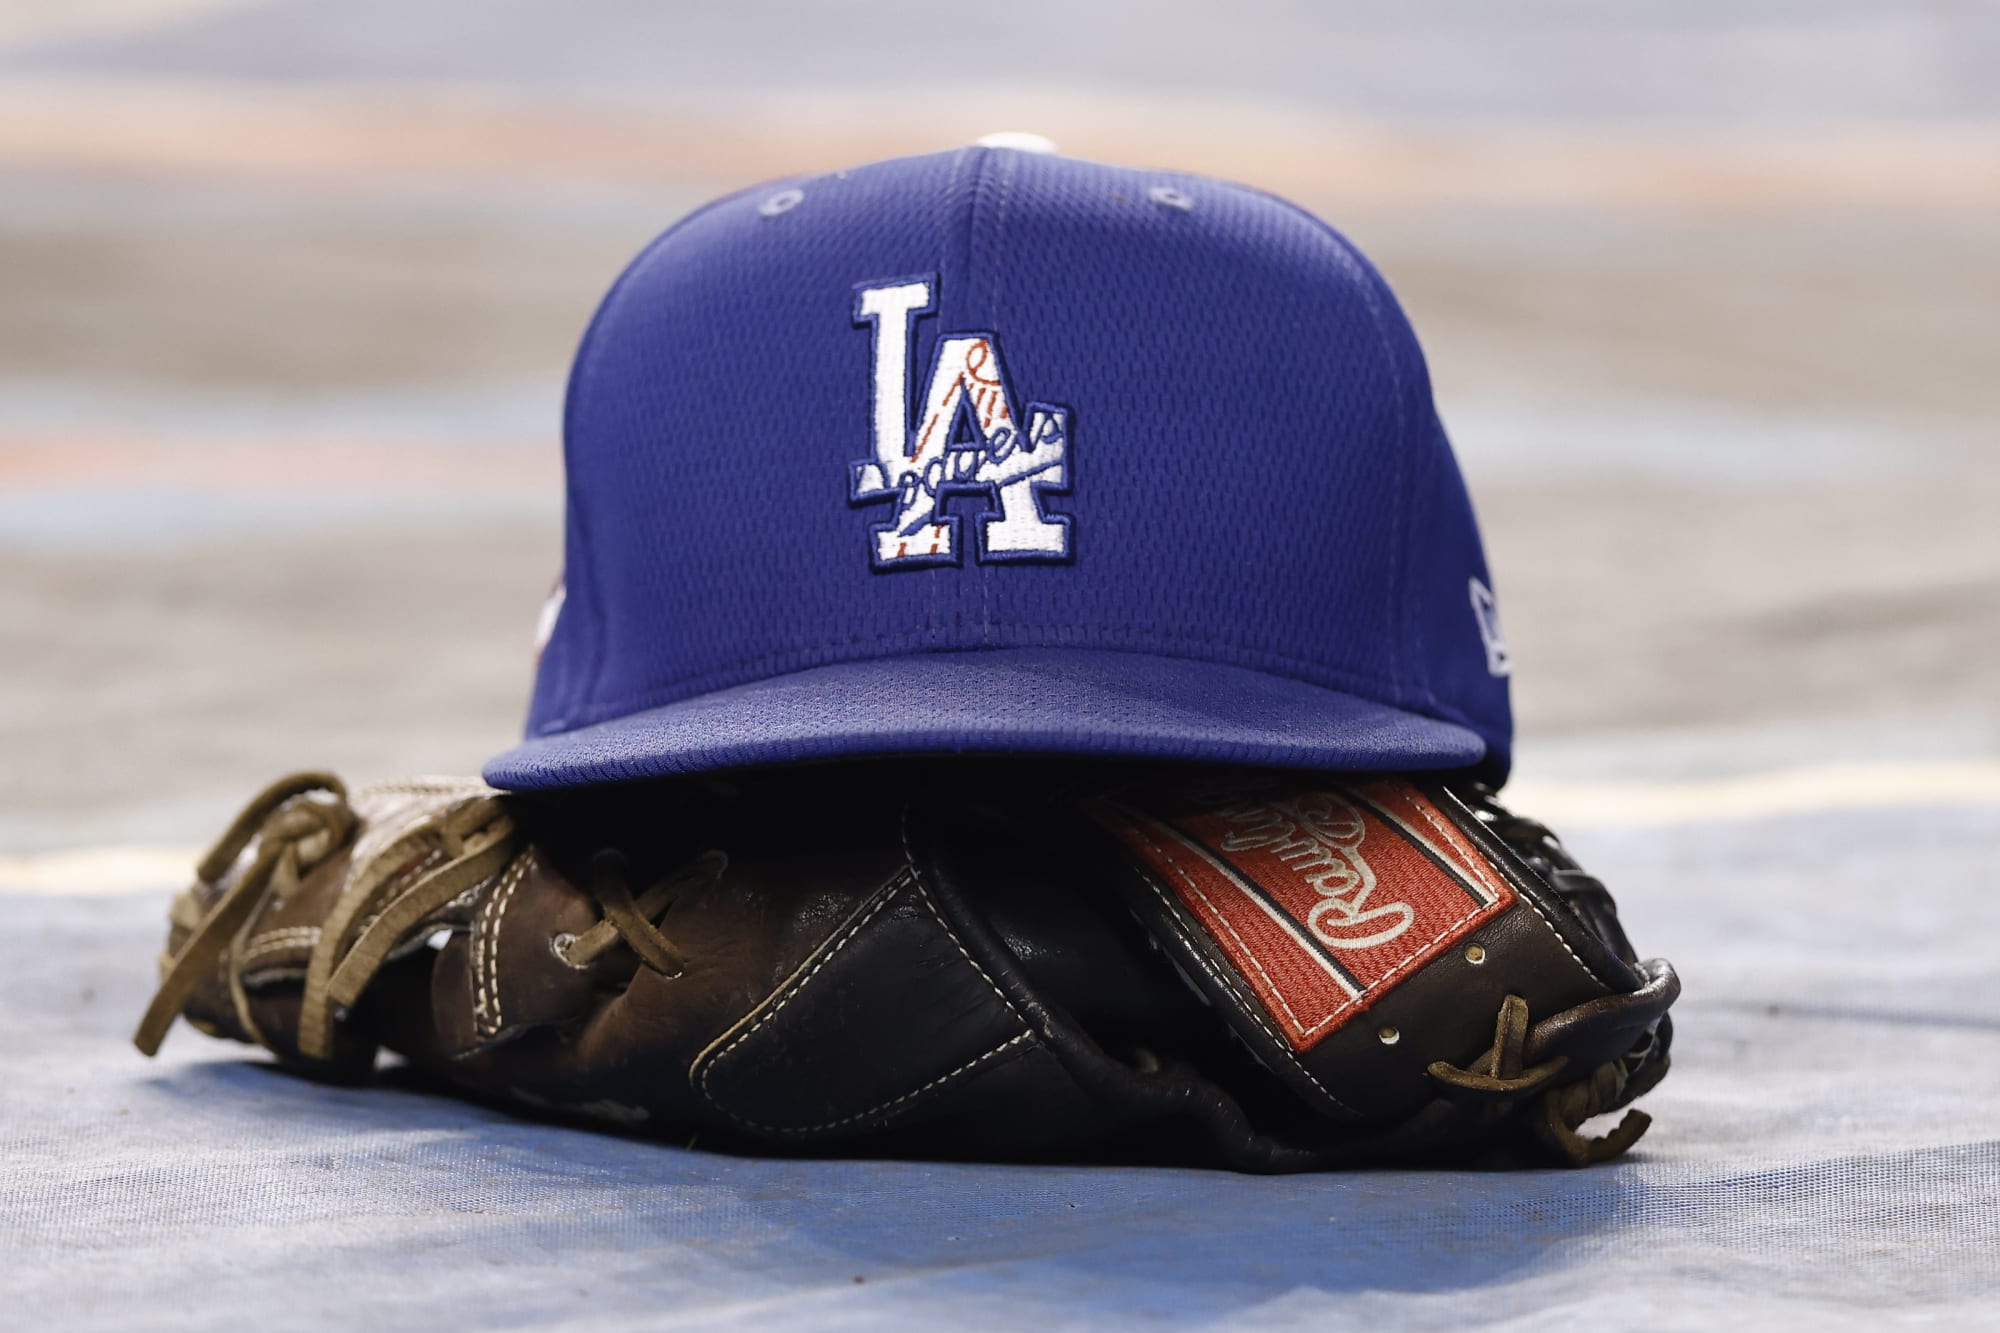 New Era keeps making ridiculous MLB hats no one wants